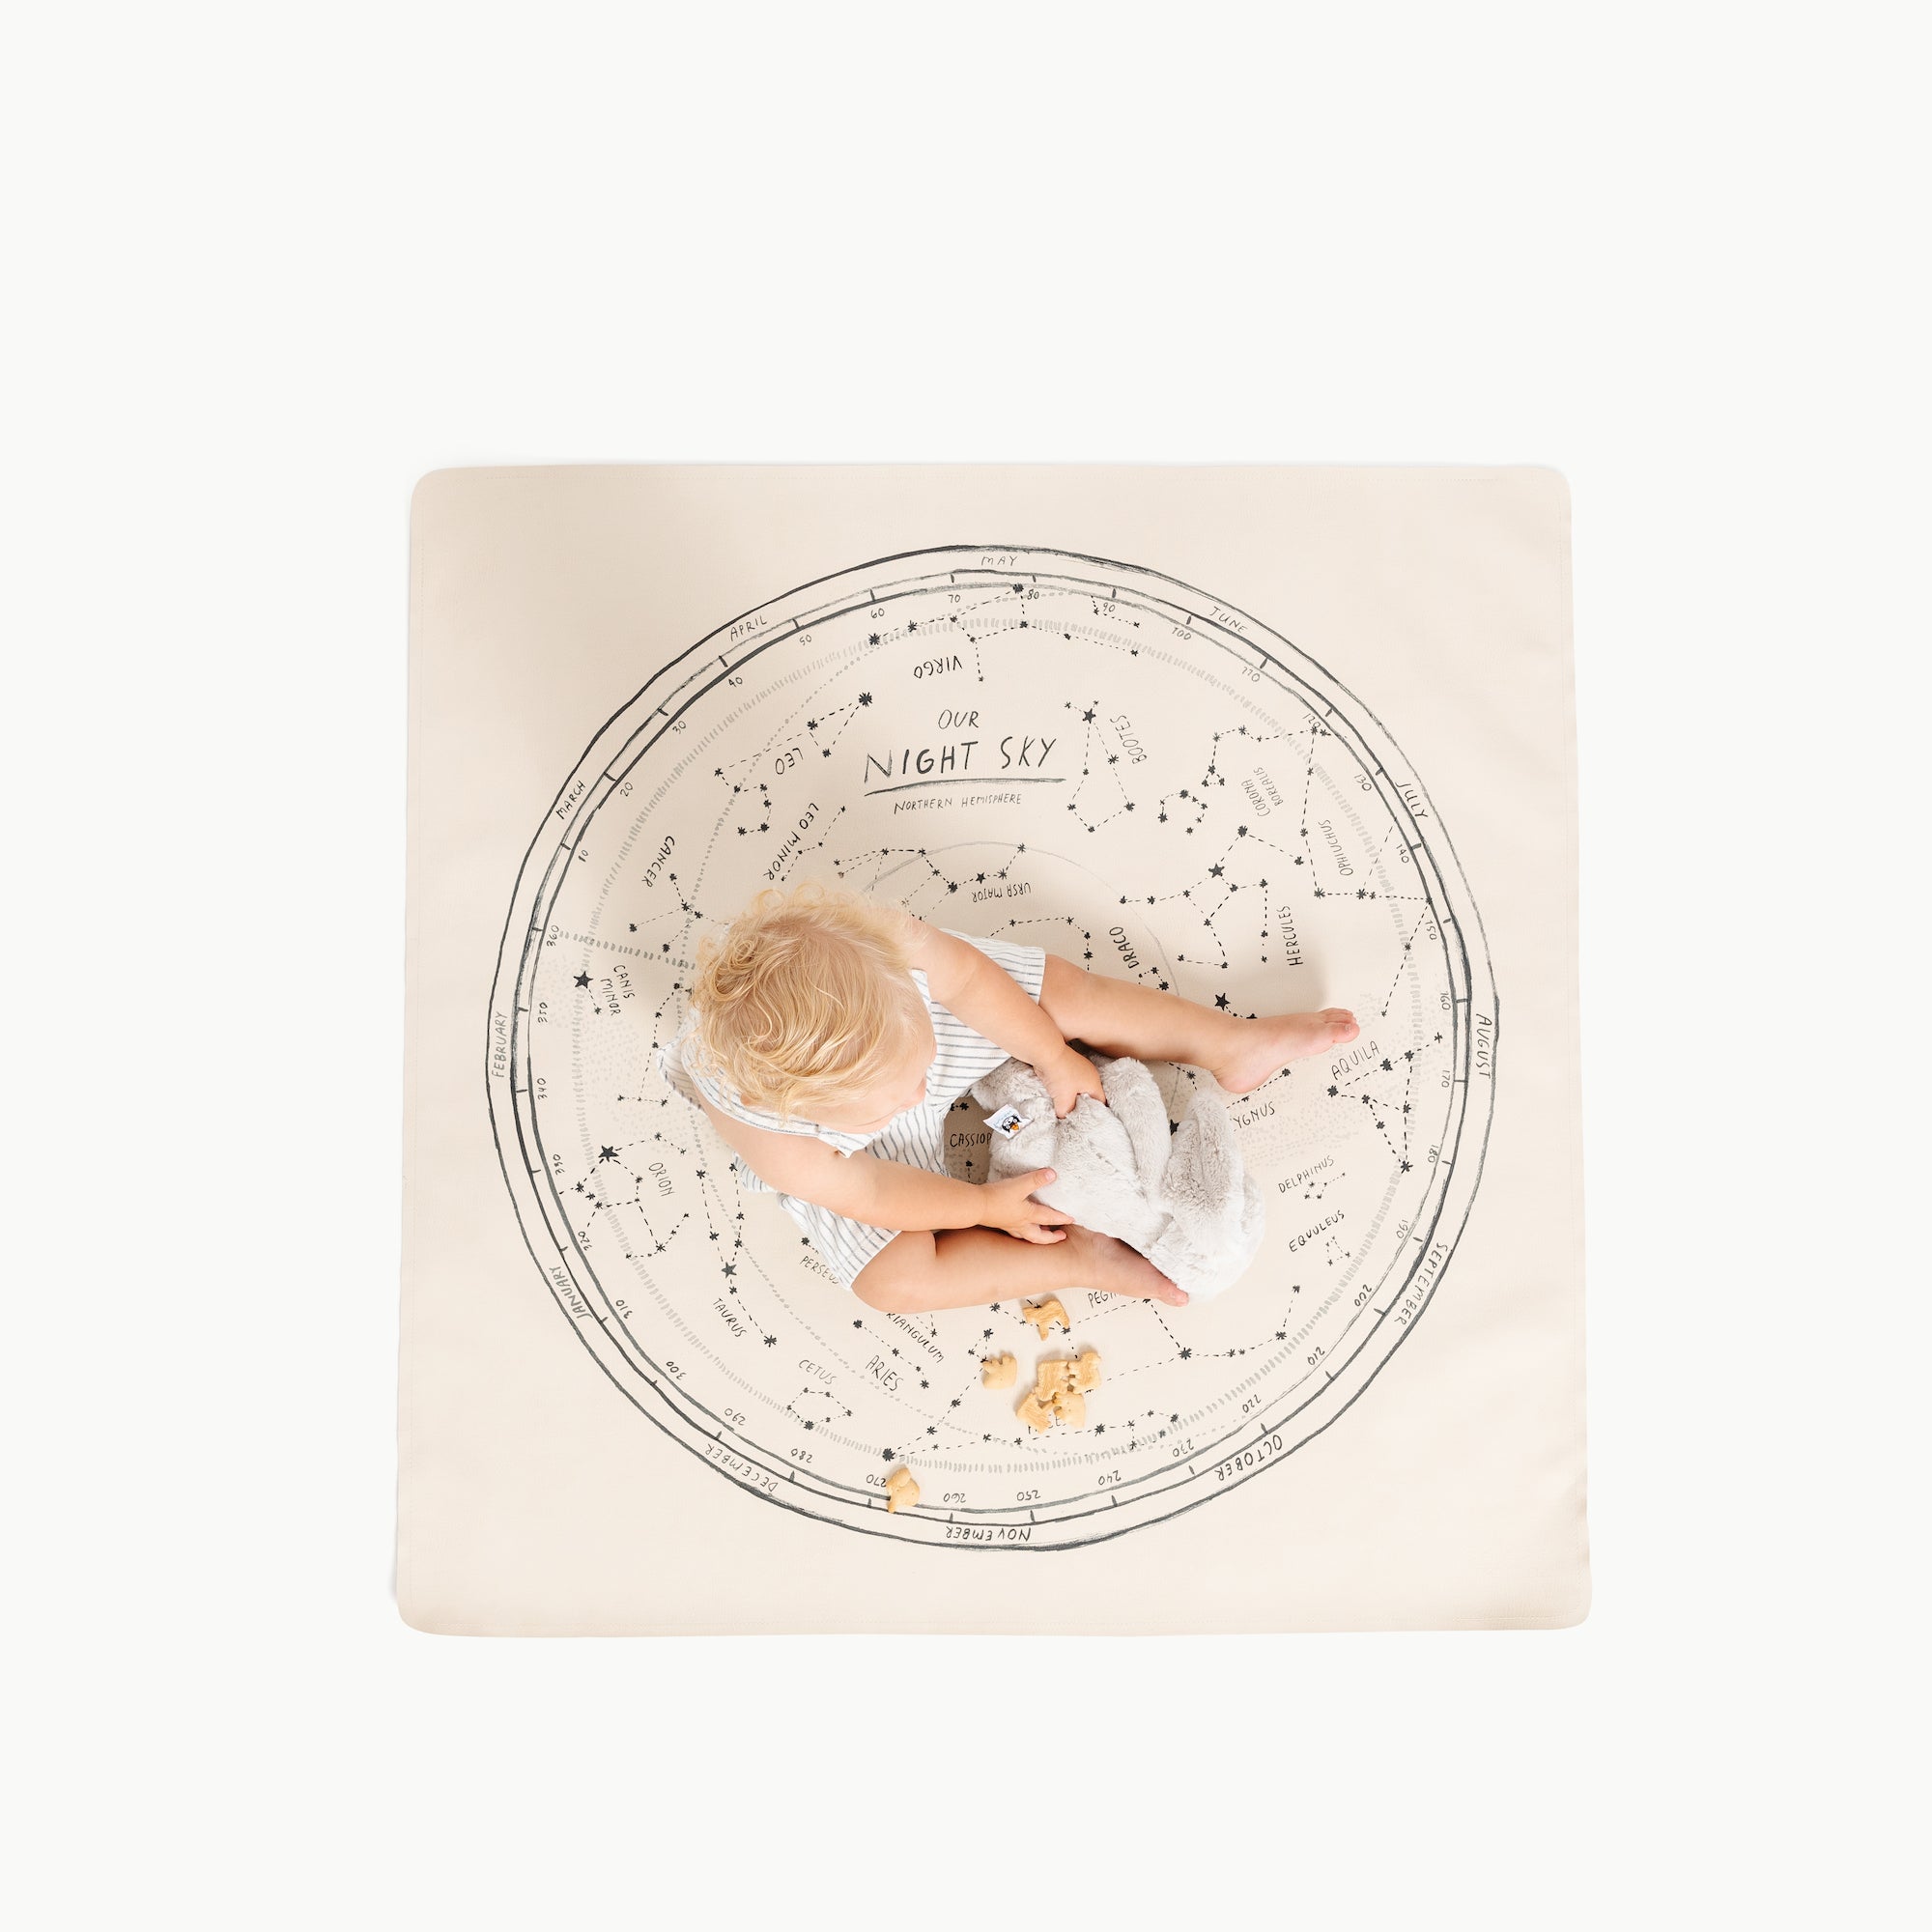 Constellation - Northern Hemisphere (on sale)@overhead of kid on the constellation mat